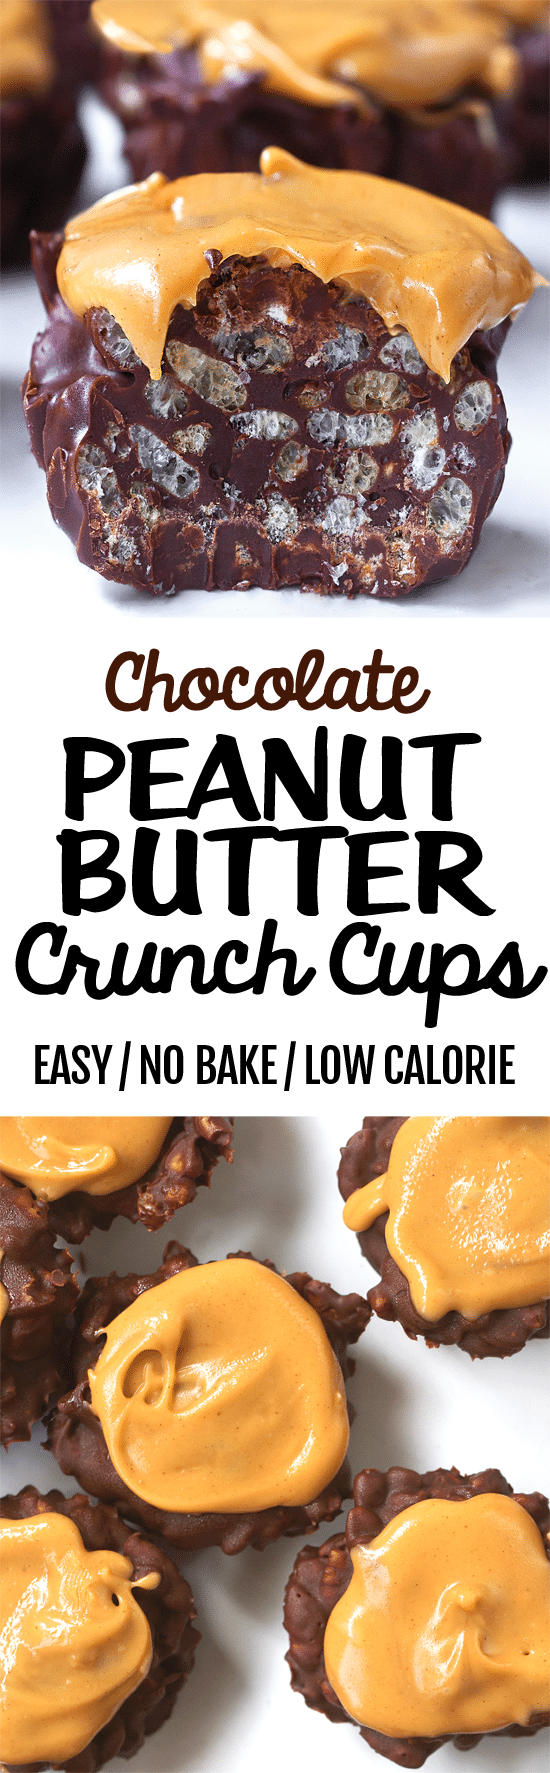 3 Ingredient Chocolate Peanut Butter Crunch Cups